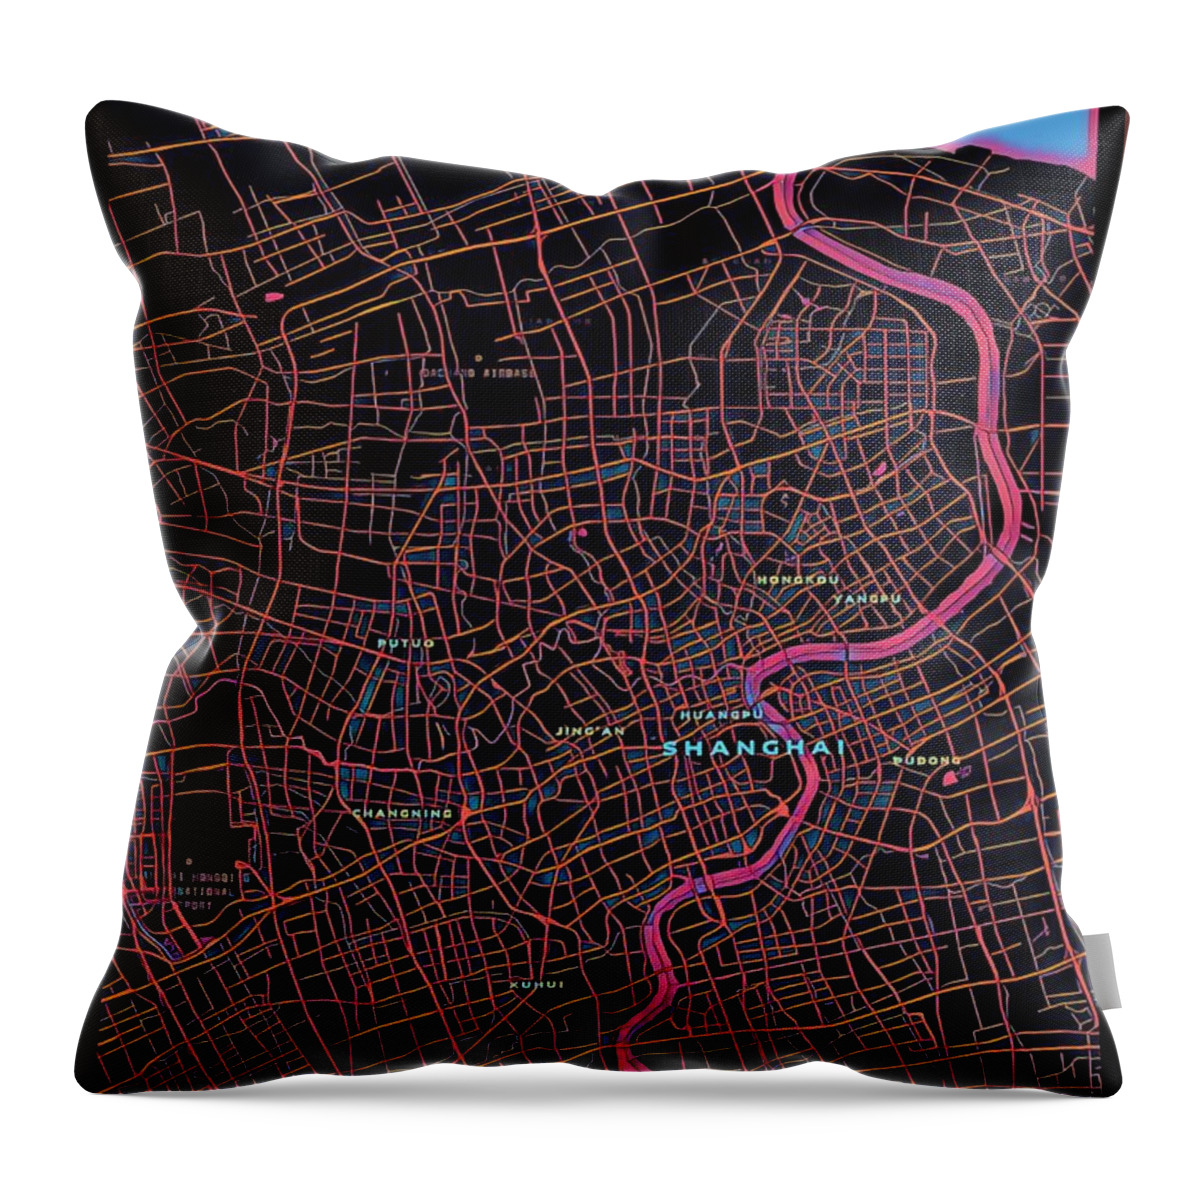 Shanghai Throw Pillow featuring the digital art Shanghai City Map by HELGE Art Gallery